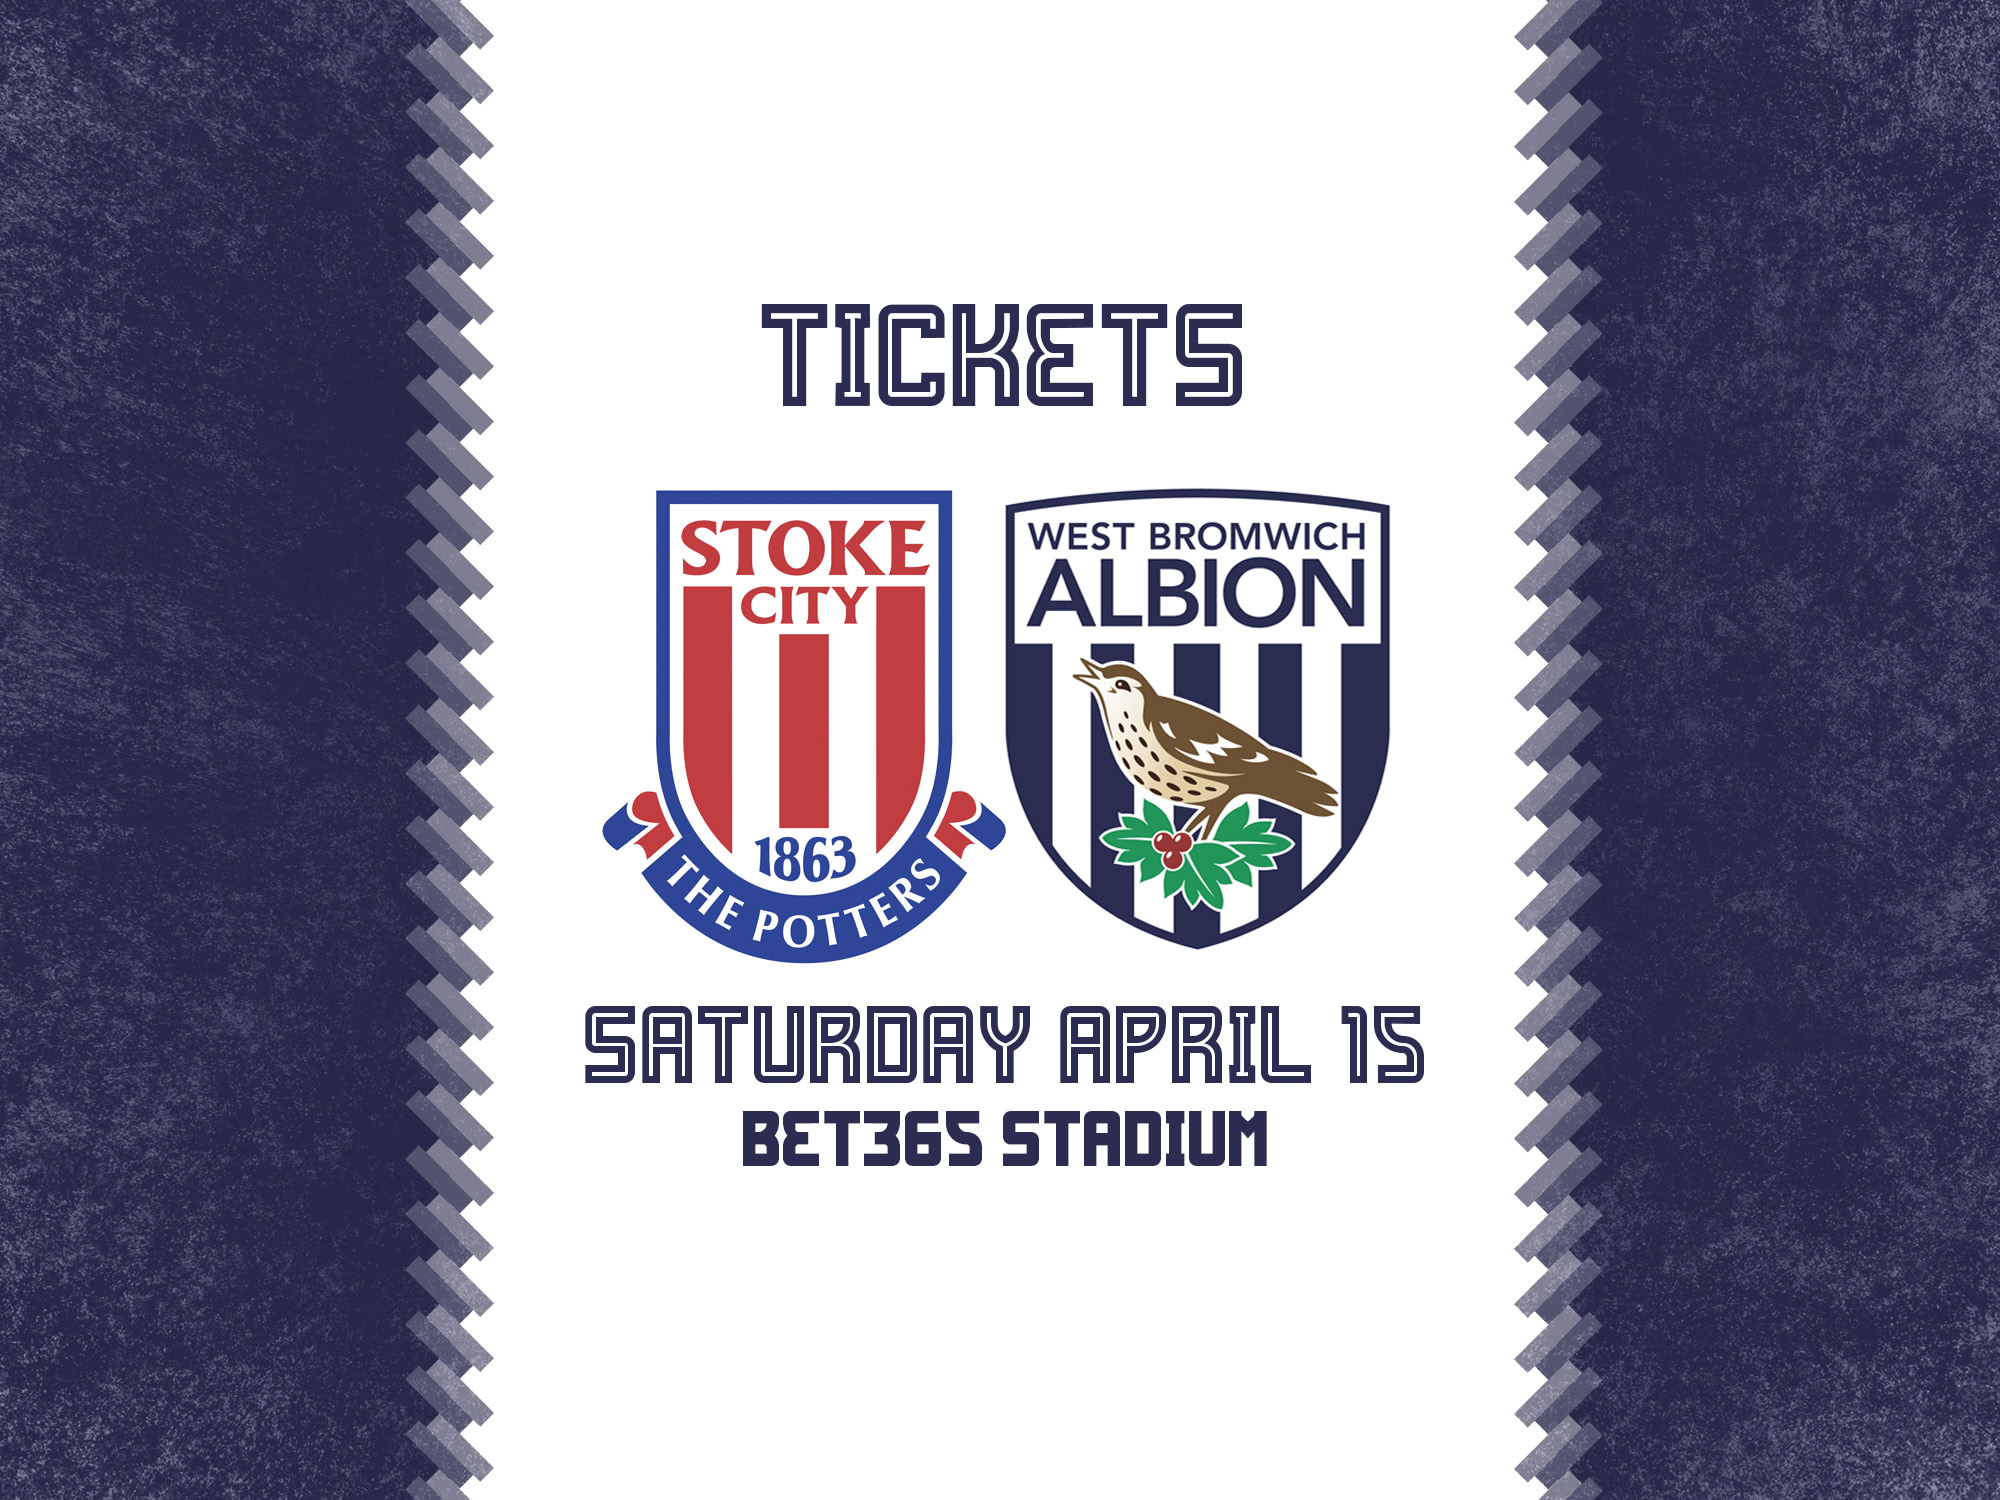 Stoke City ticket details